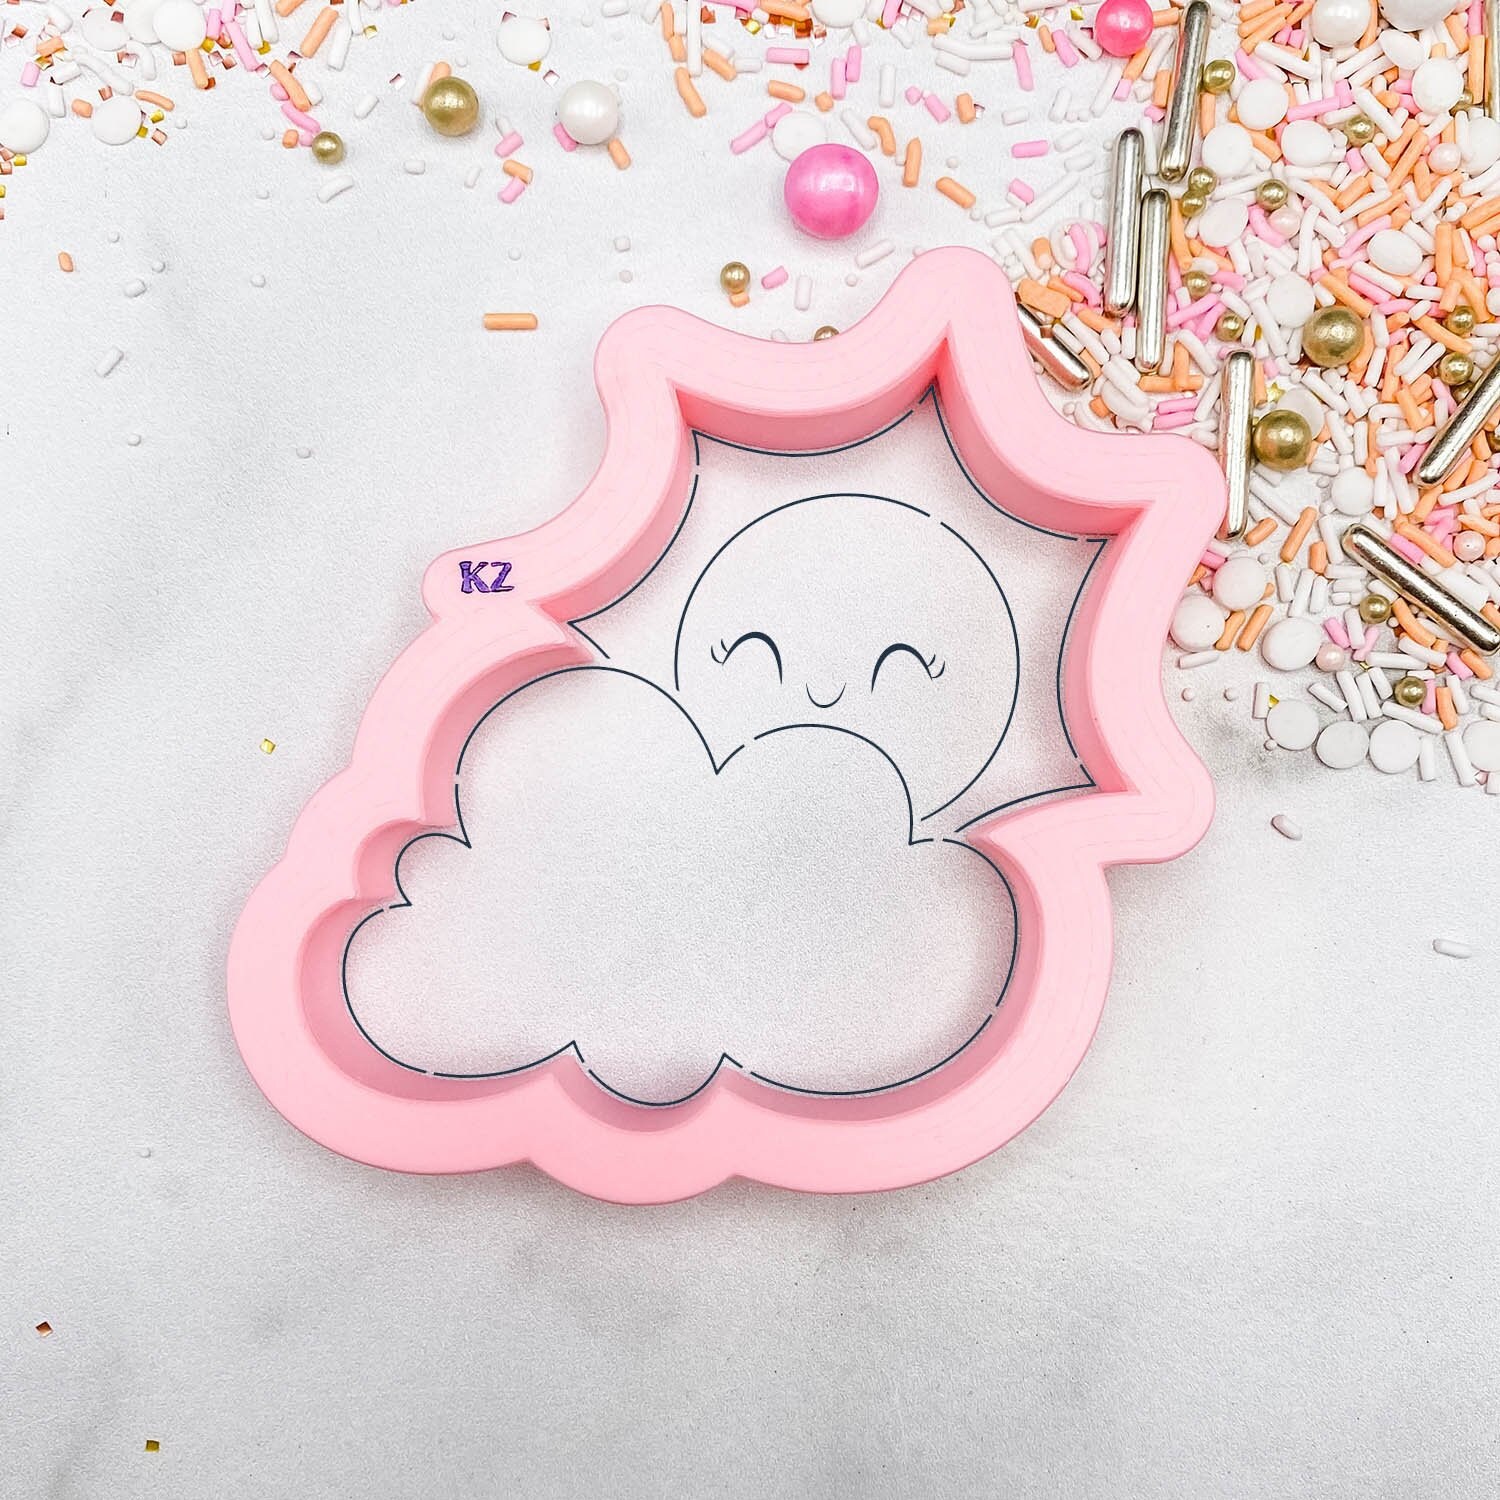 Sun Cloud Cookie Cutter – Sweet4ucutters